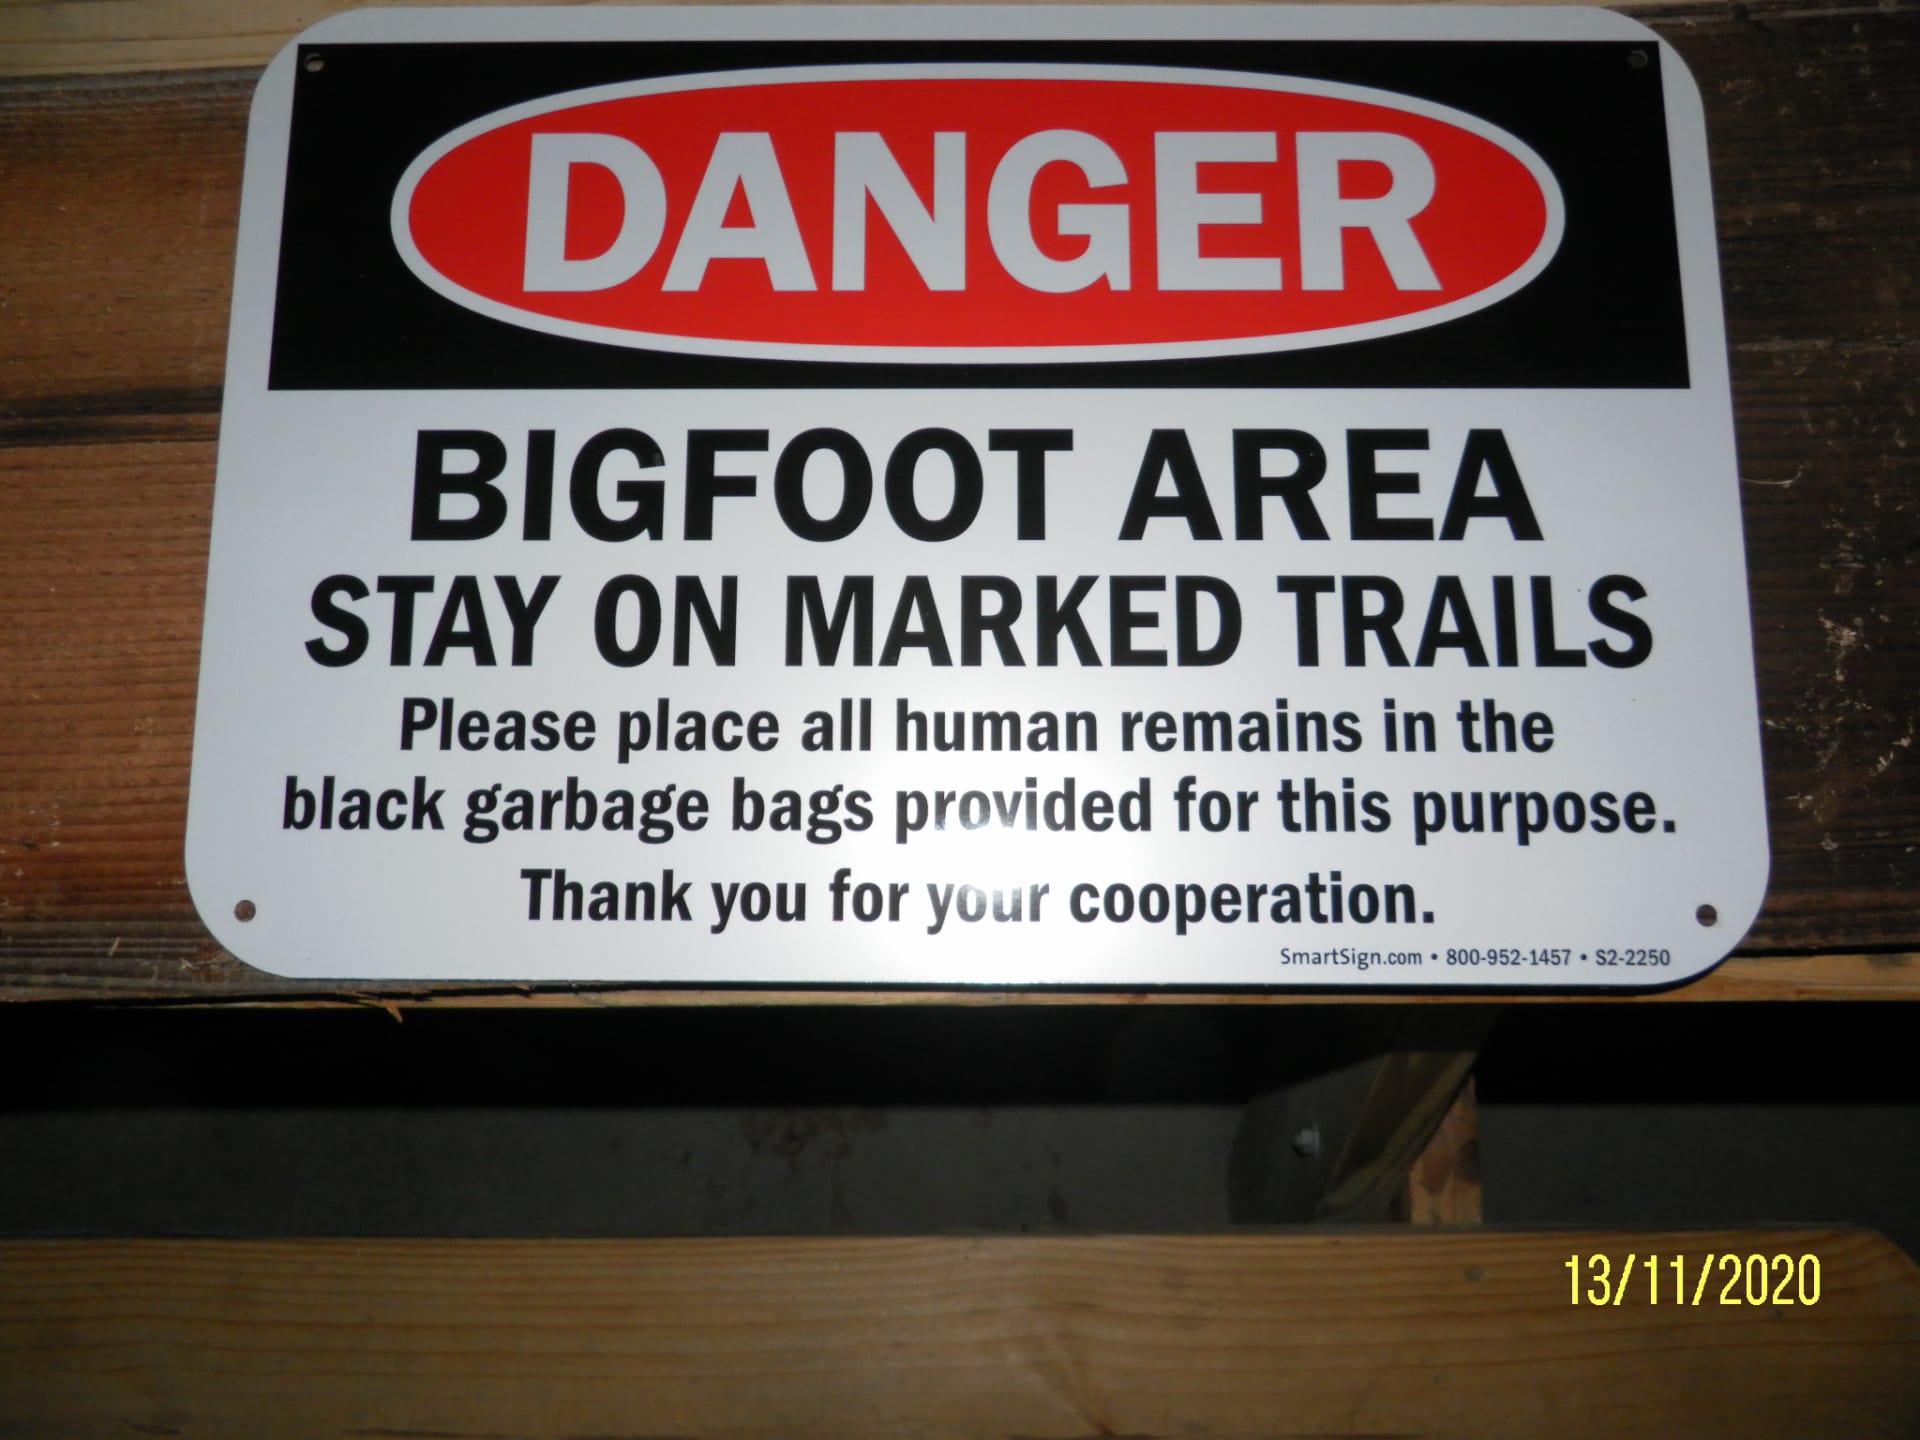 Bigfoot Area!